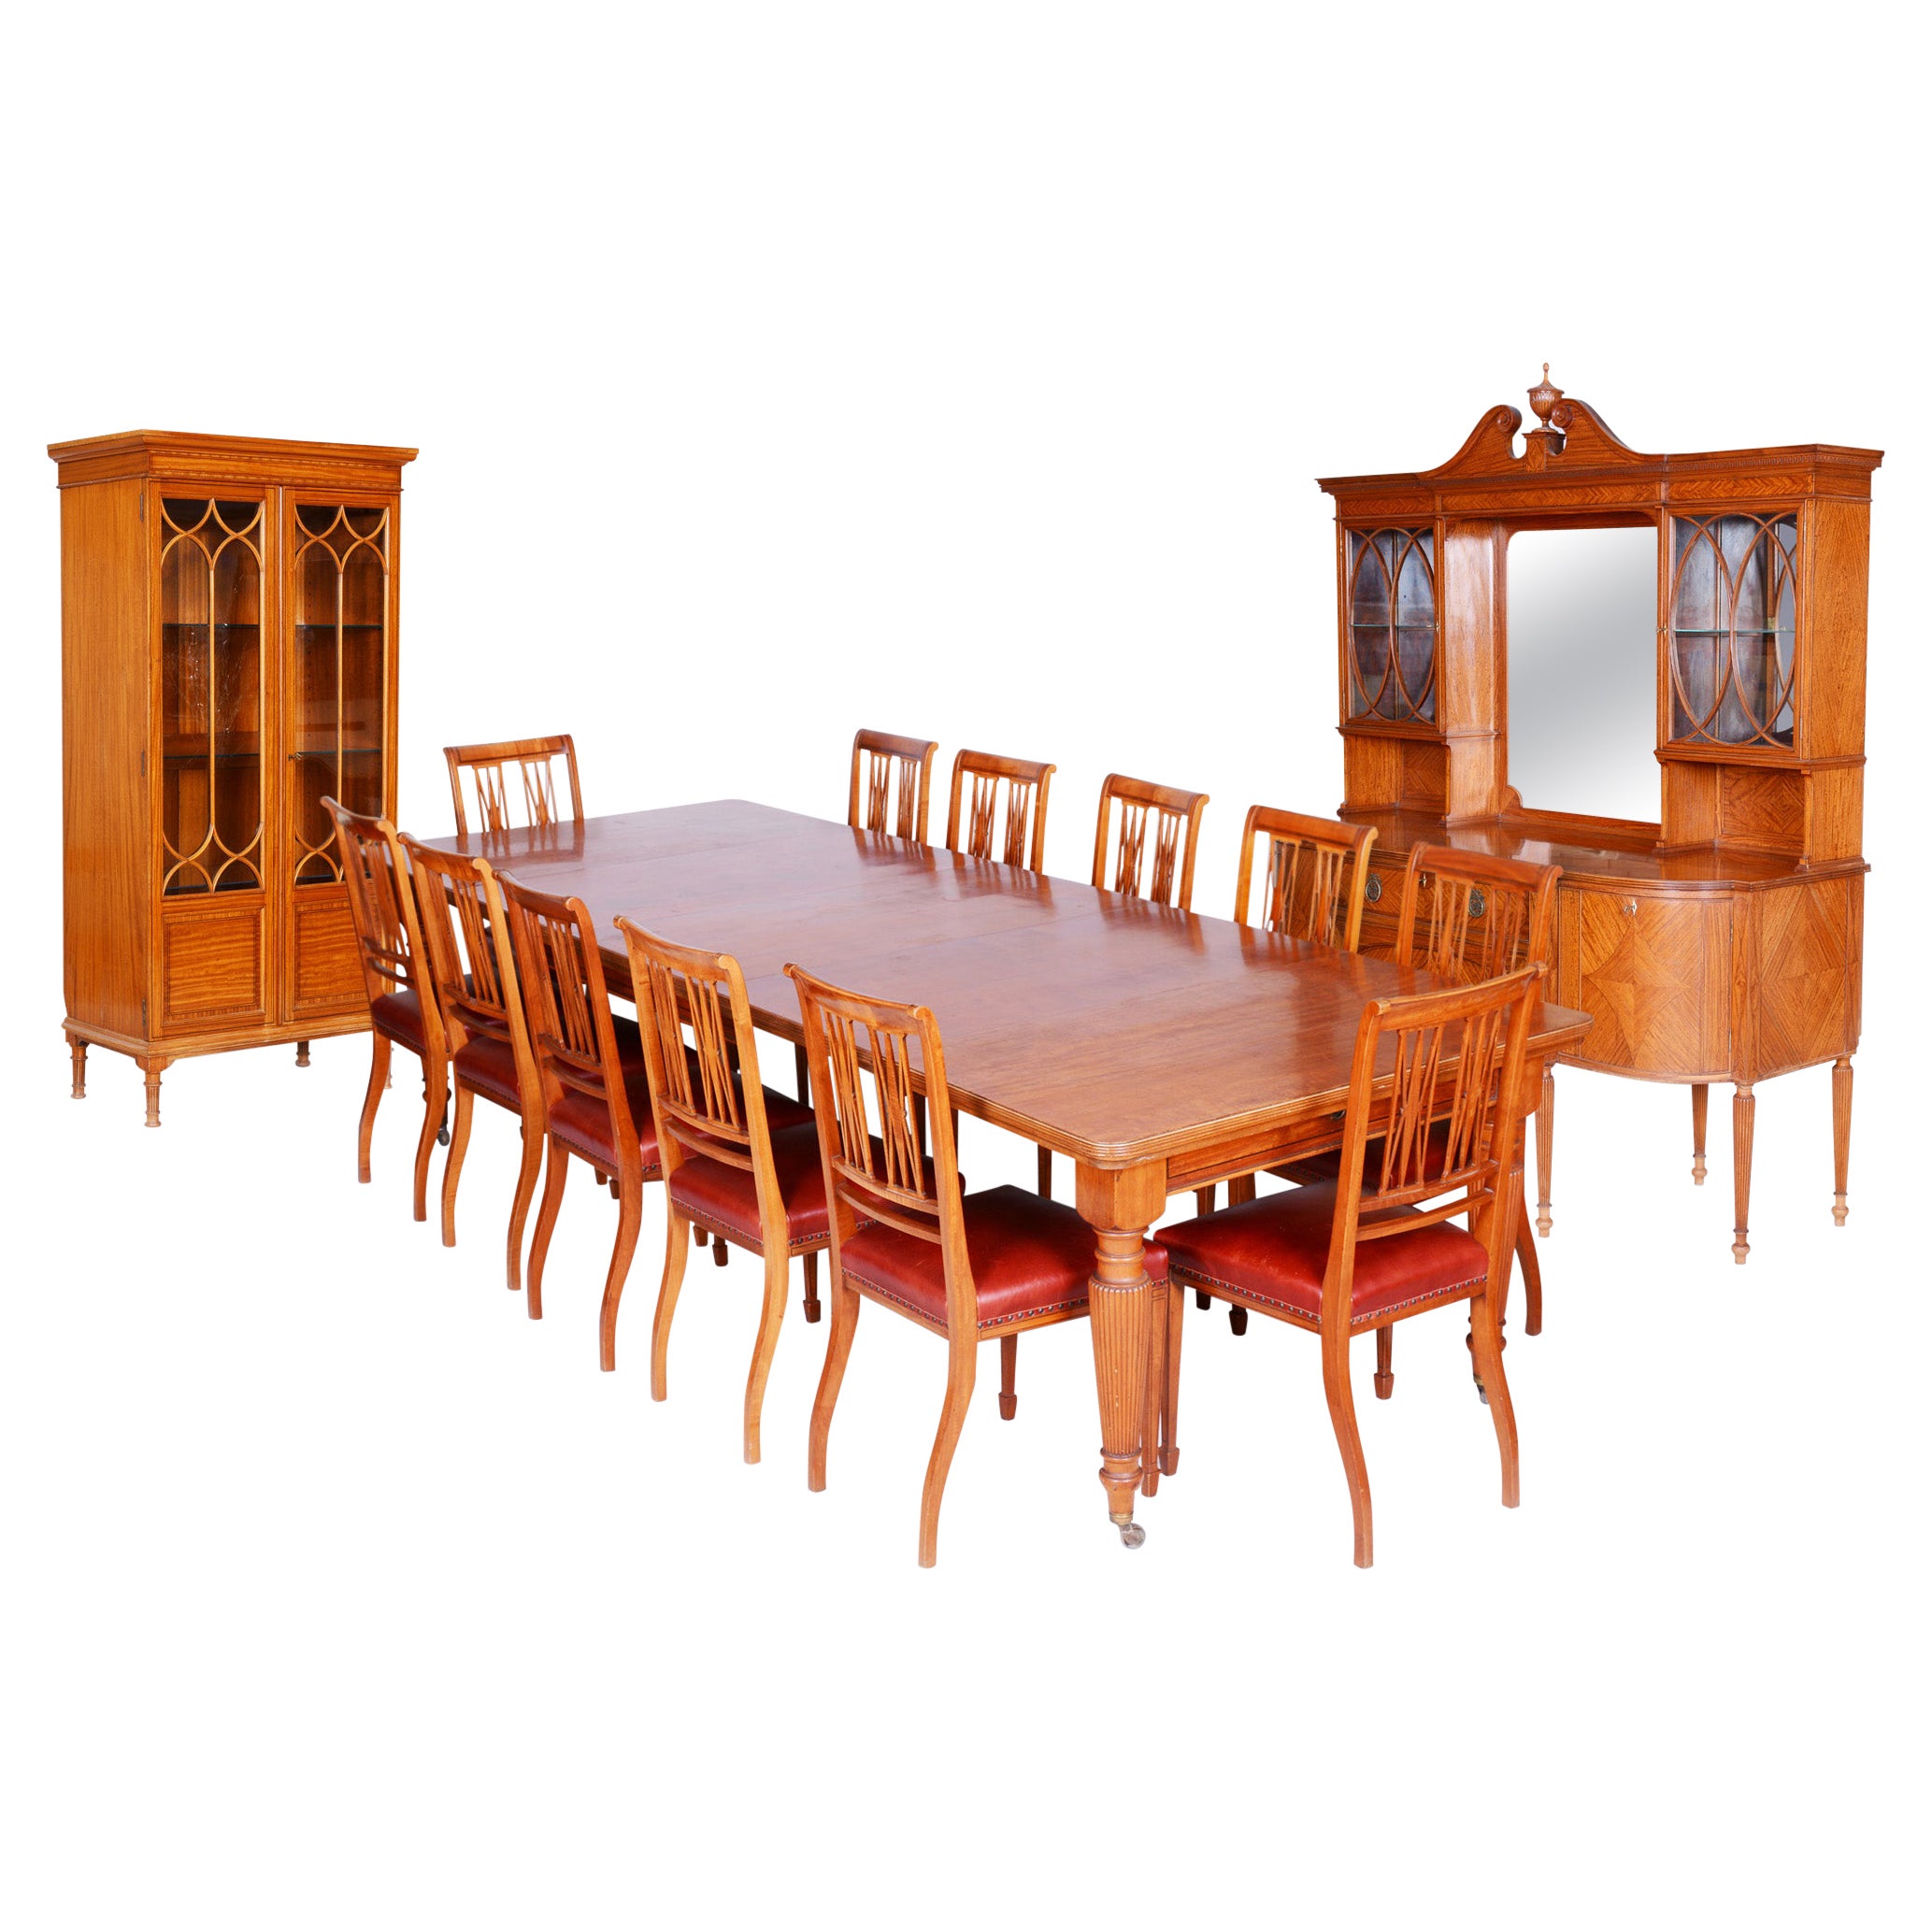 19th Century Original British Dinning Room Set with 12 Chairs, Satin Wood